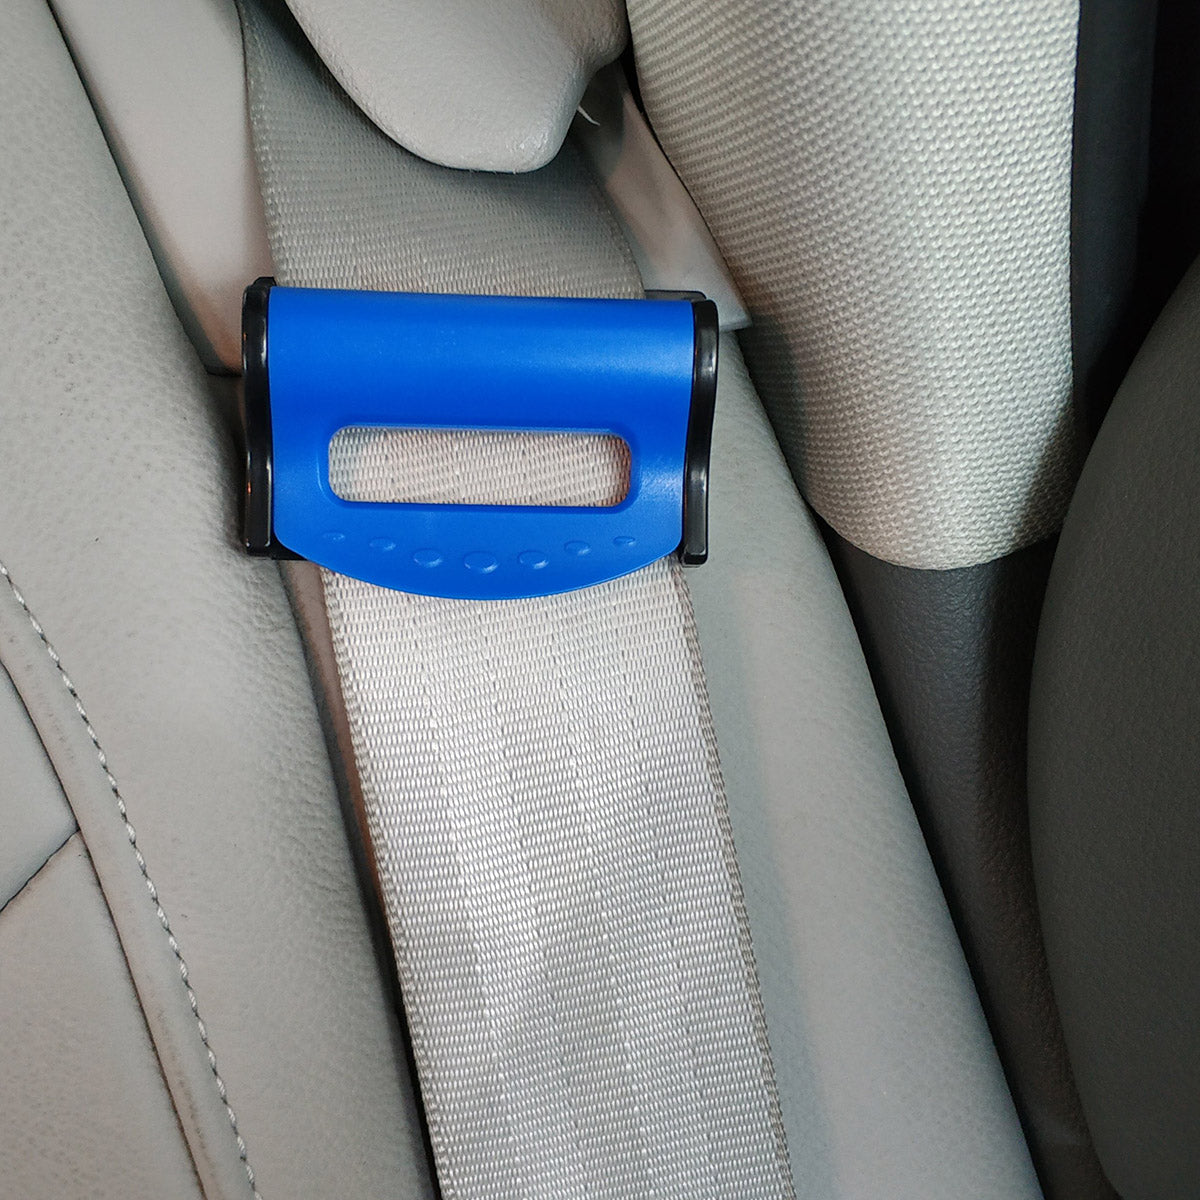 Safety Car Parts Seat Belt Clip - 2Pcs Stopper Adjuster Clip for Shoulder and Neck Relaxation